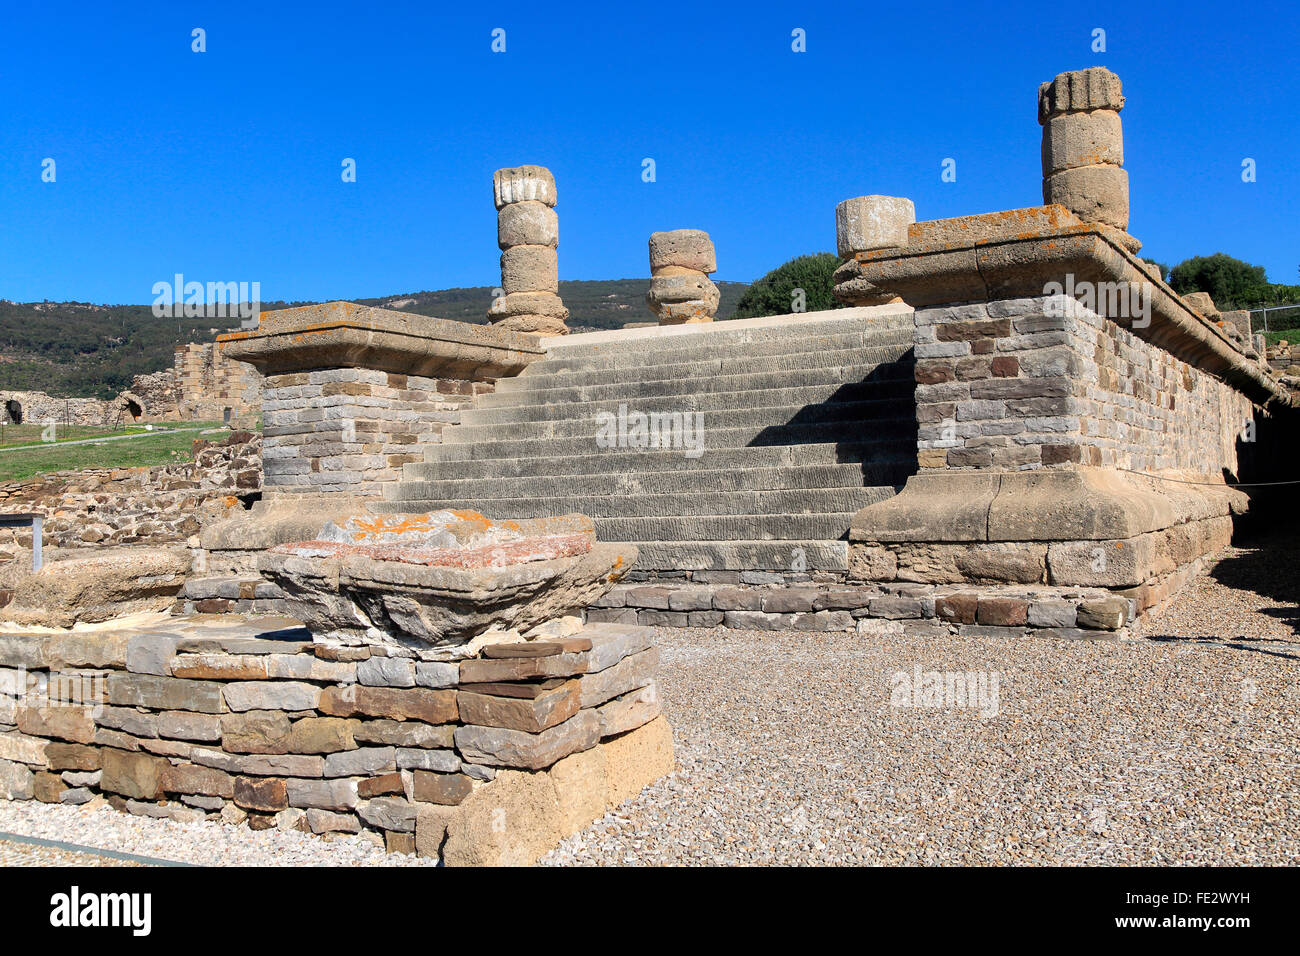 Temple de Baelo Claudia, site romain de la province de Cadix, Espagne Banque D'Images